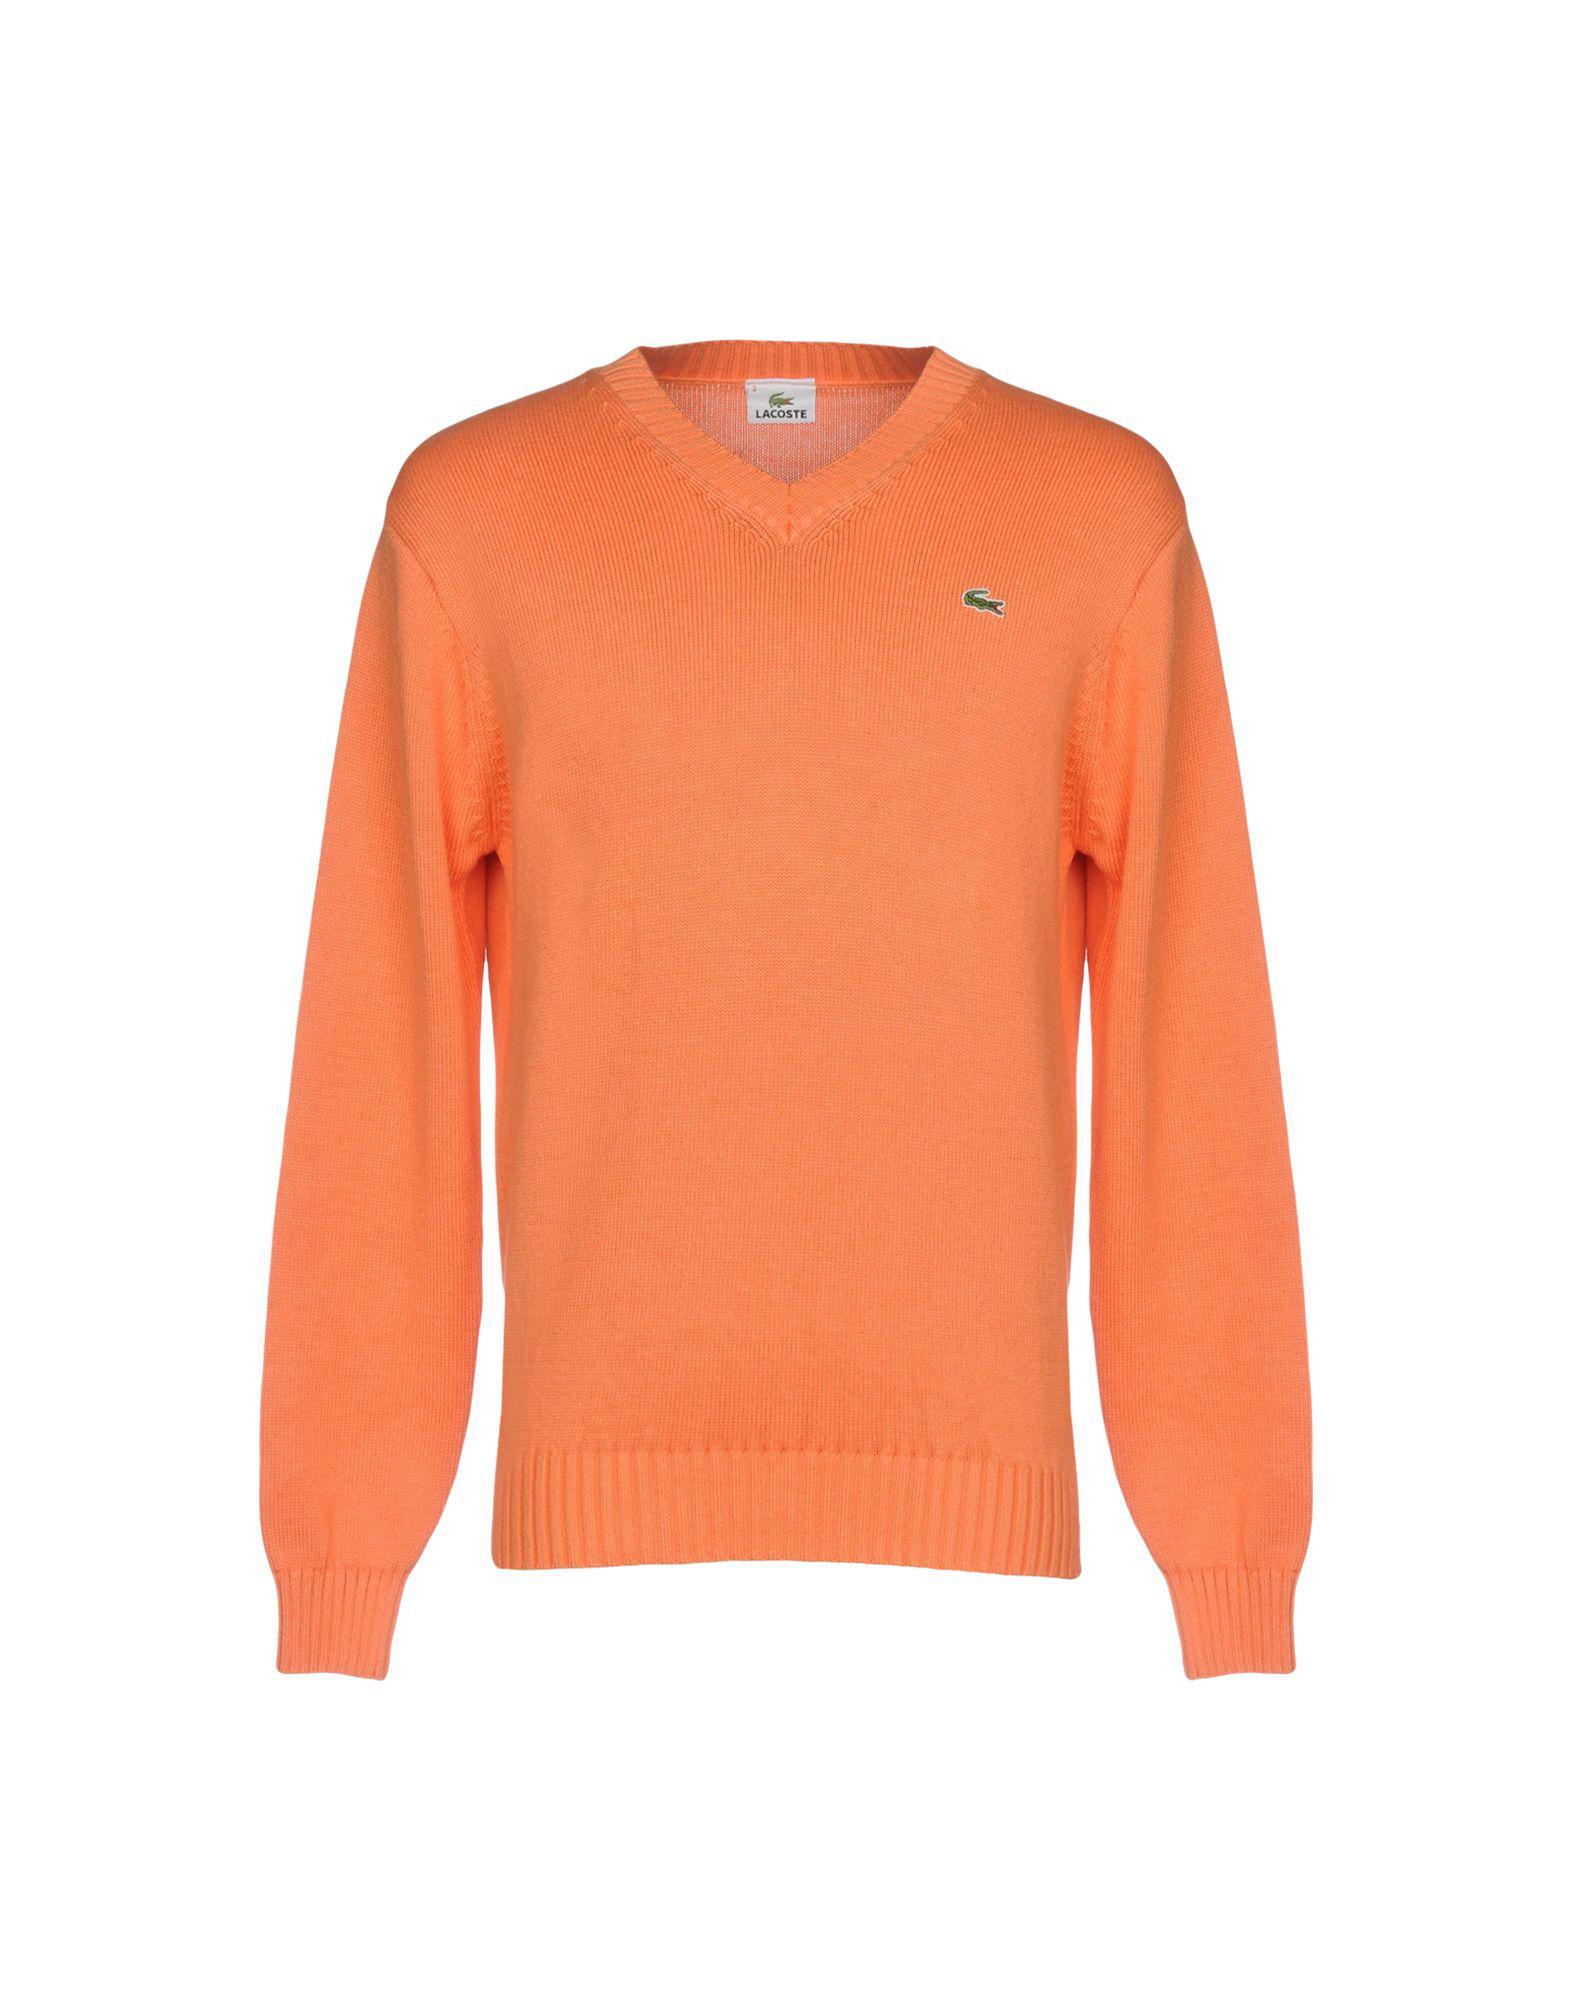 Cotton Sweater in Orange for Men - Lyst